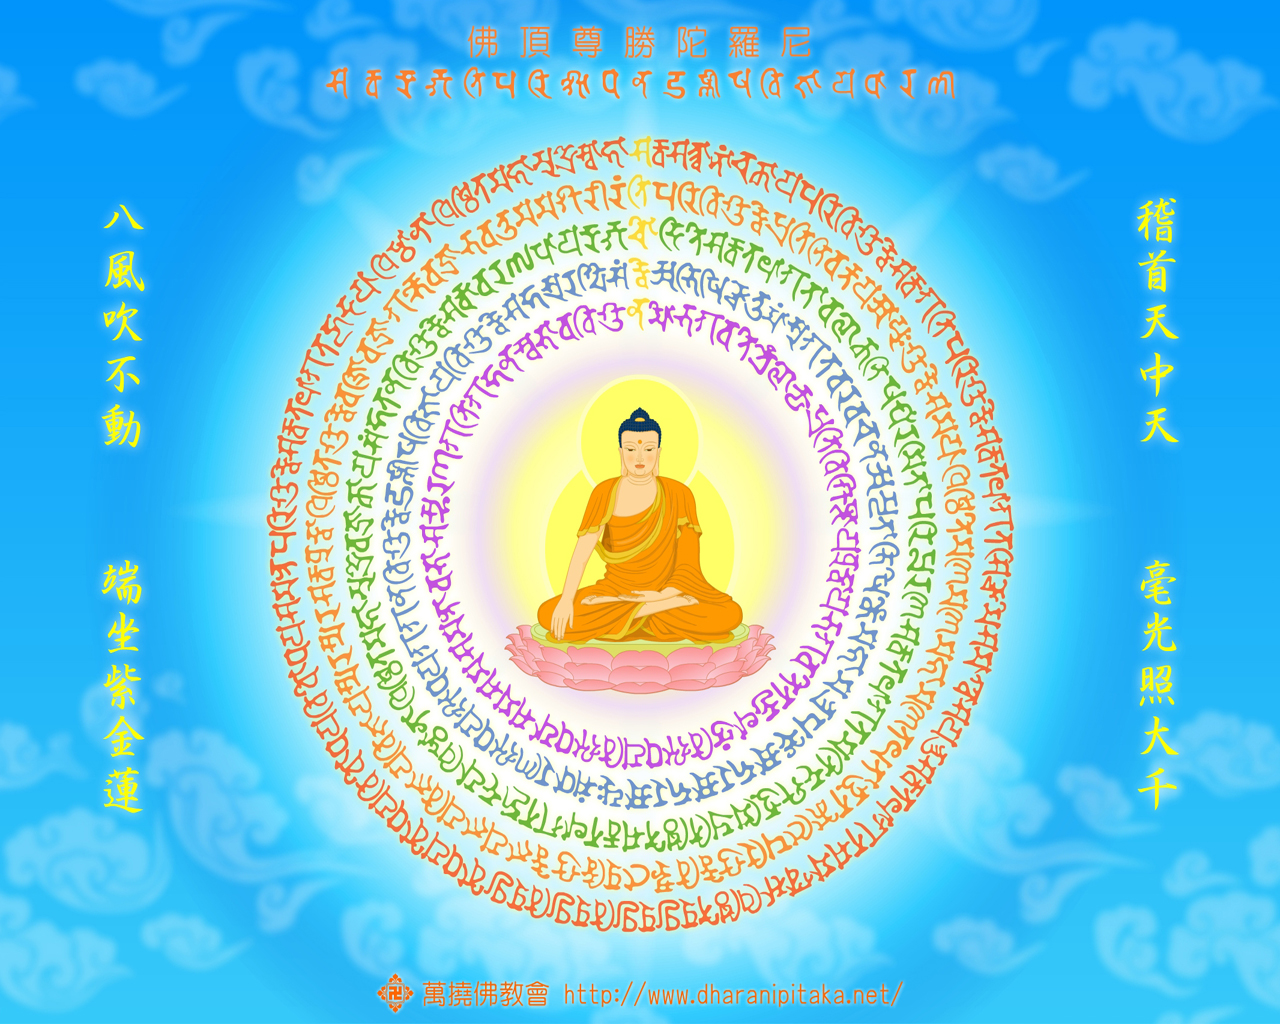 The Wallpaper has the Buddha with a Touching-Earth Mudra (Bhūmī Sparśa Mudra 